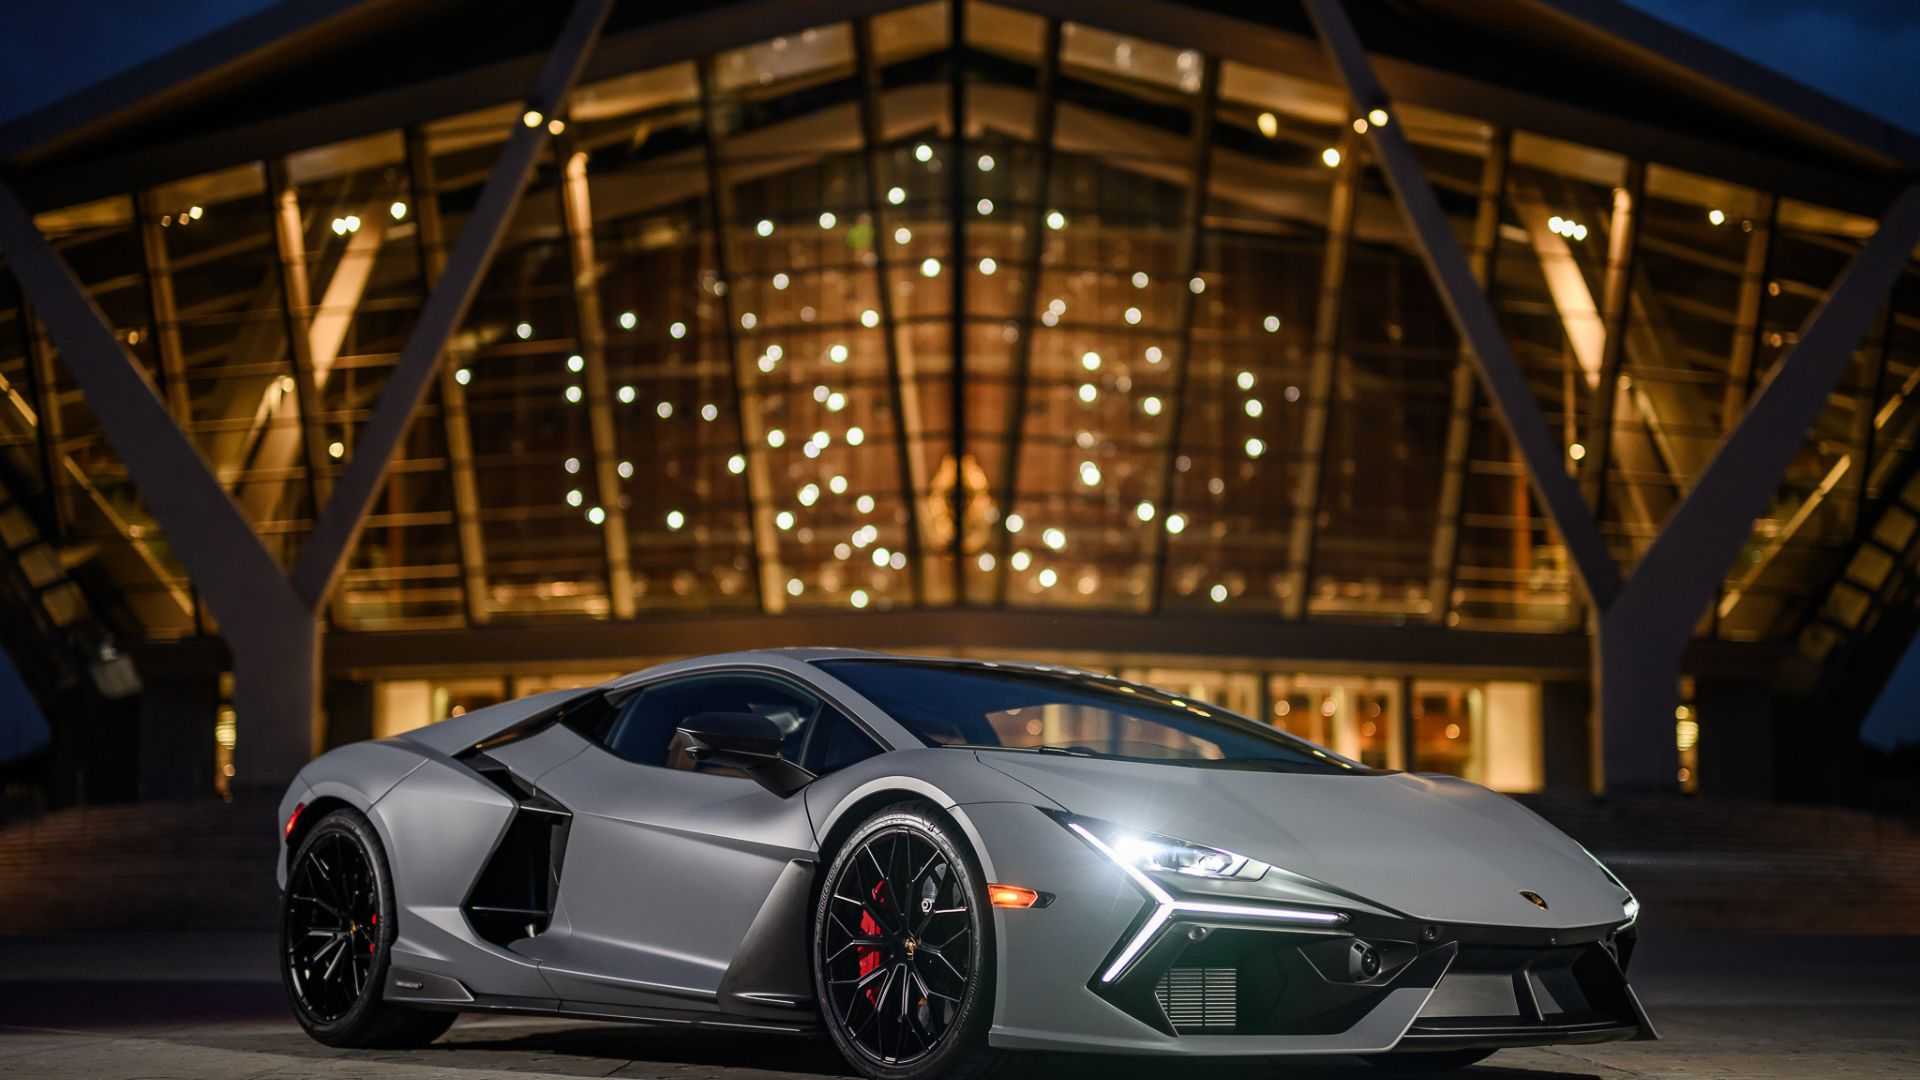 Lamborghini rolls out Electric, V12 Hybrid